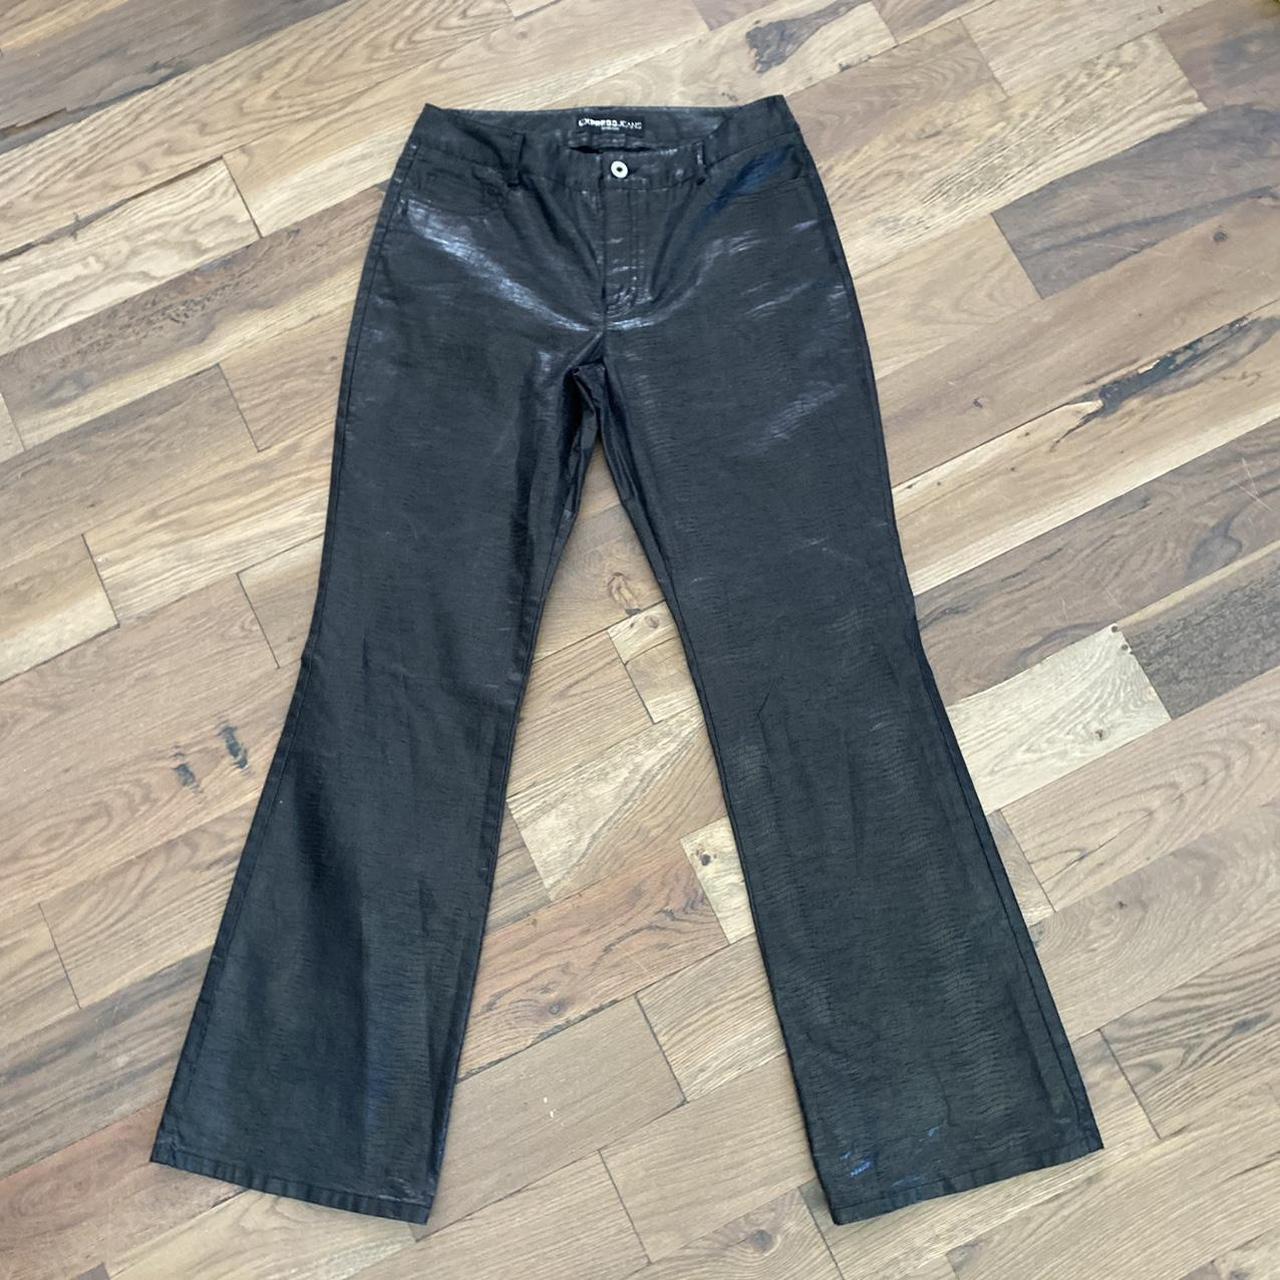 Express Black High Waist Flare Jeans Cotton based - Depop